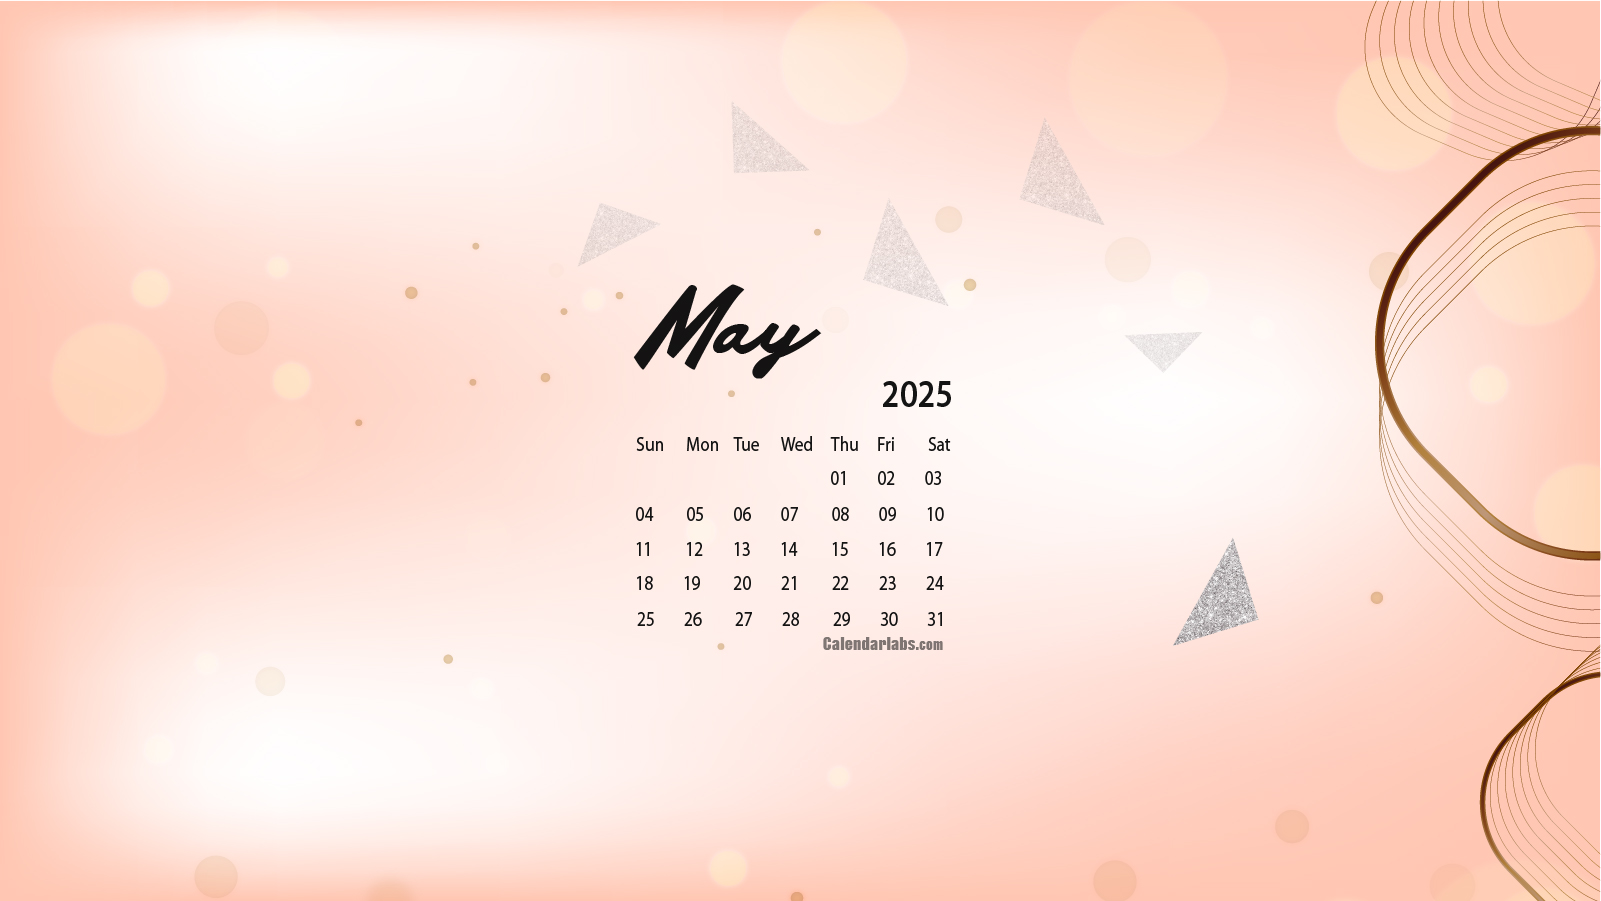 May 2025 Desktop Wallpaper Calendar